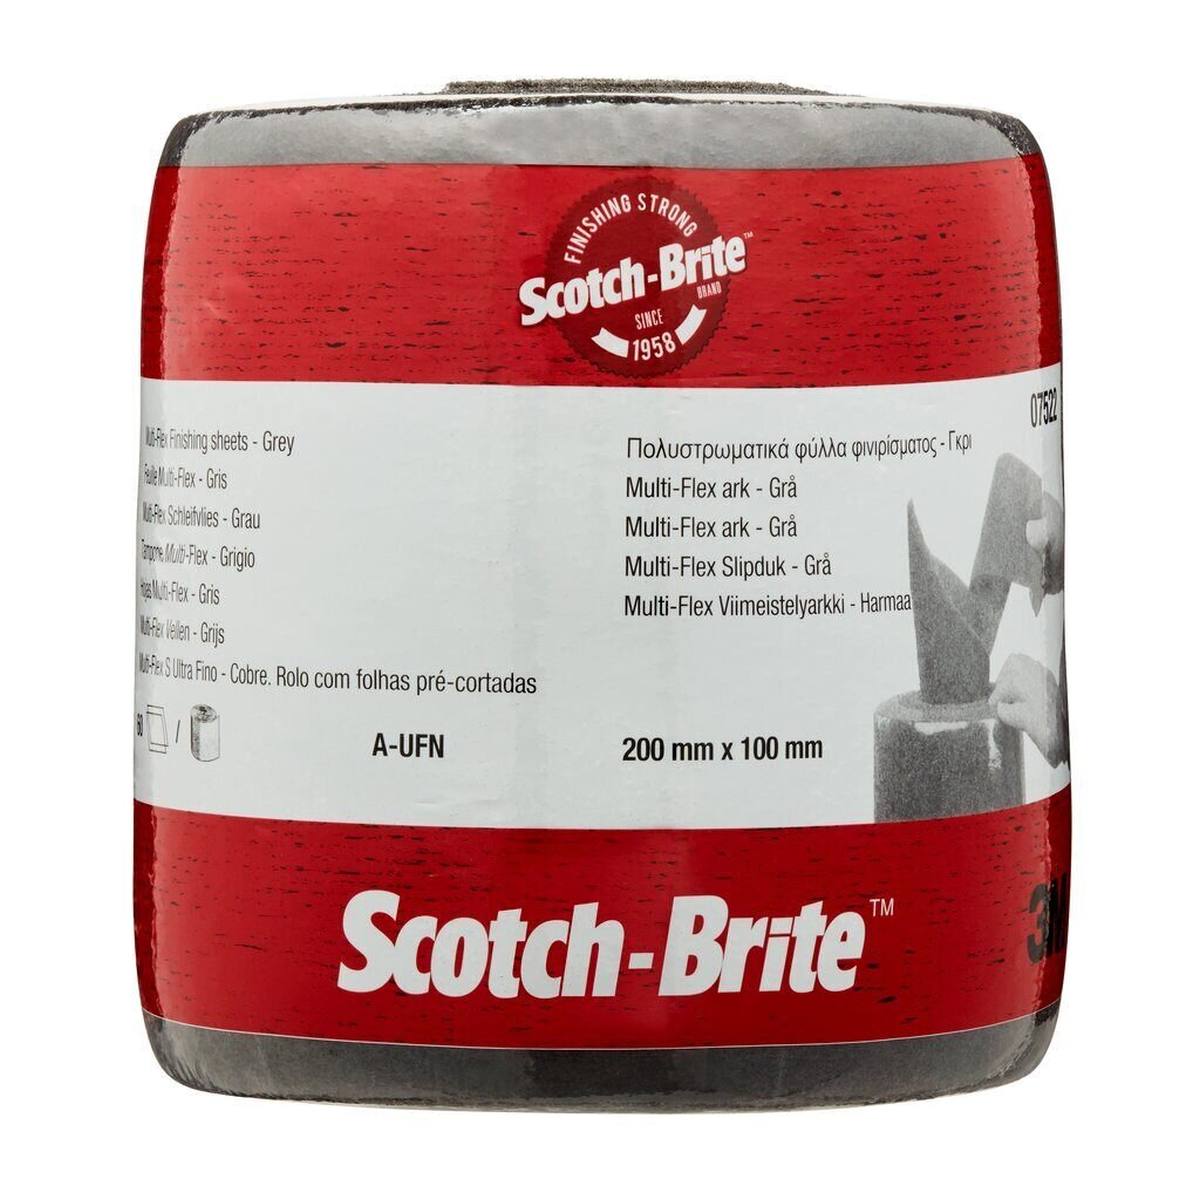 3M Scotch-Brite Multi-Flex non-woven roll MX-SR, grey, 100 mm x 200 mm, A, ultra fine, 60-fold perforated #07522